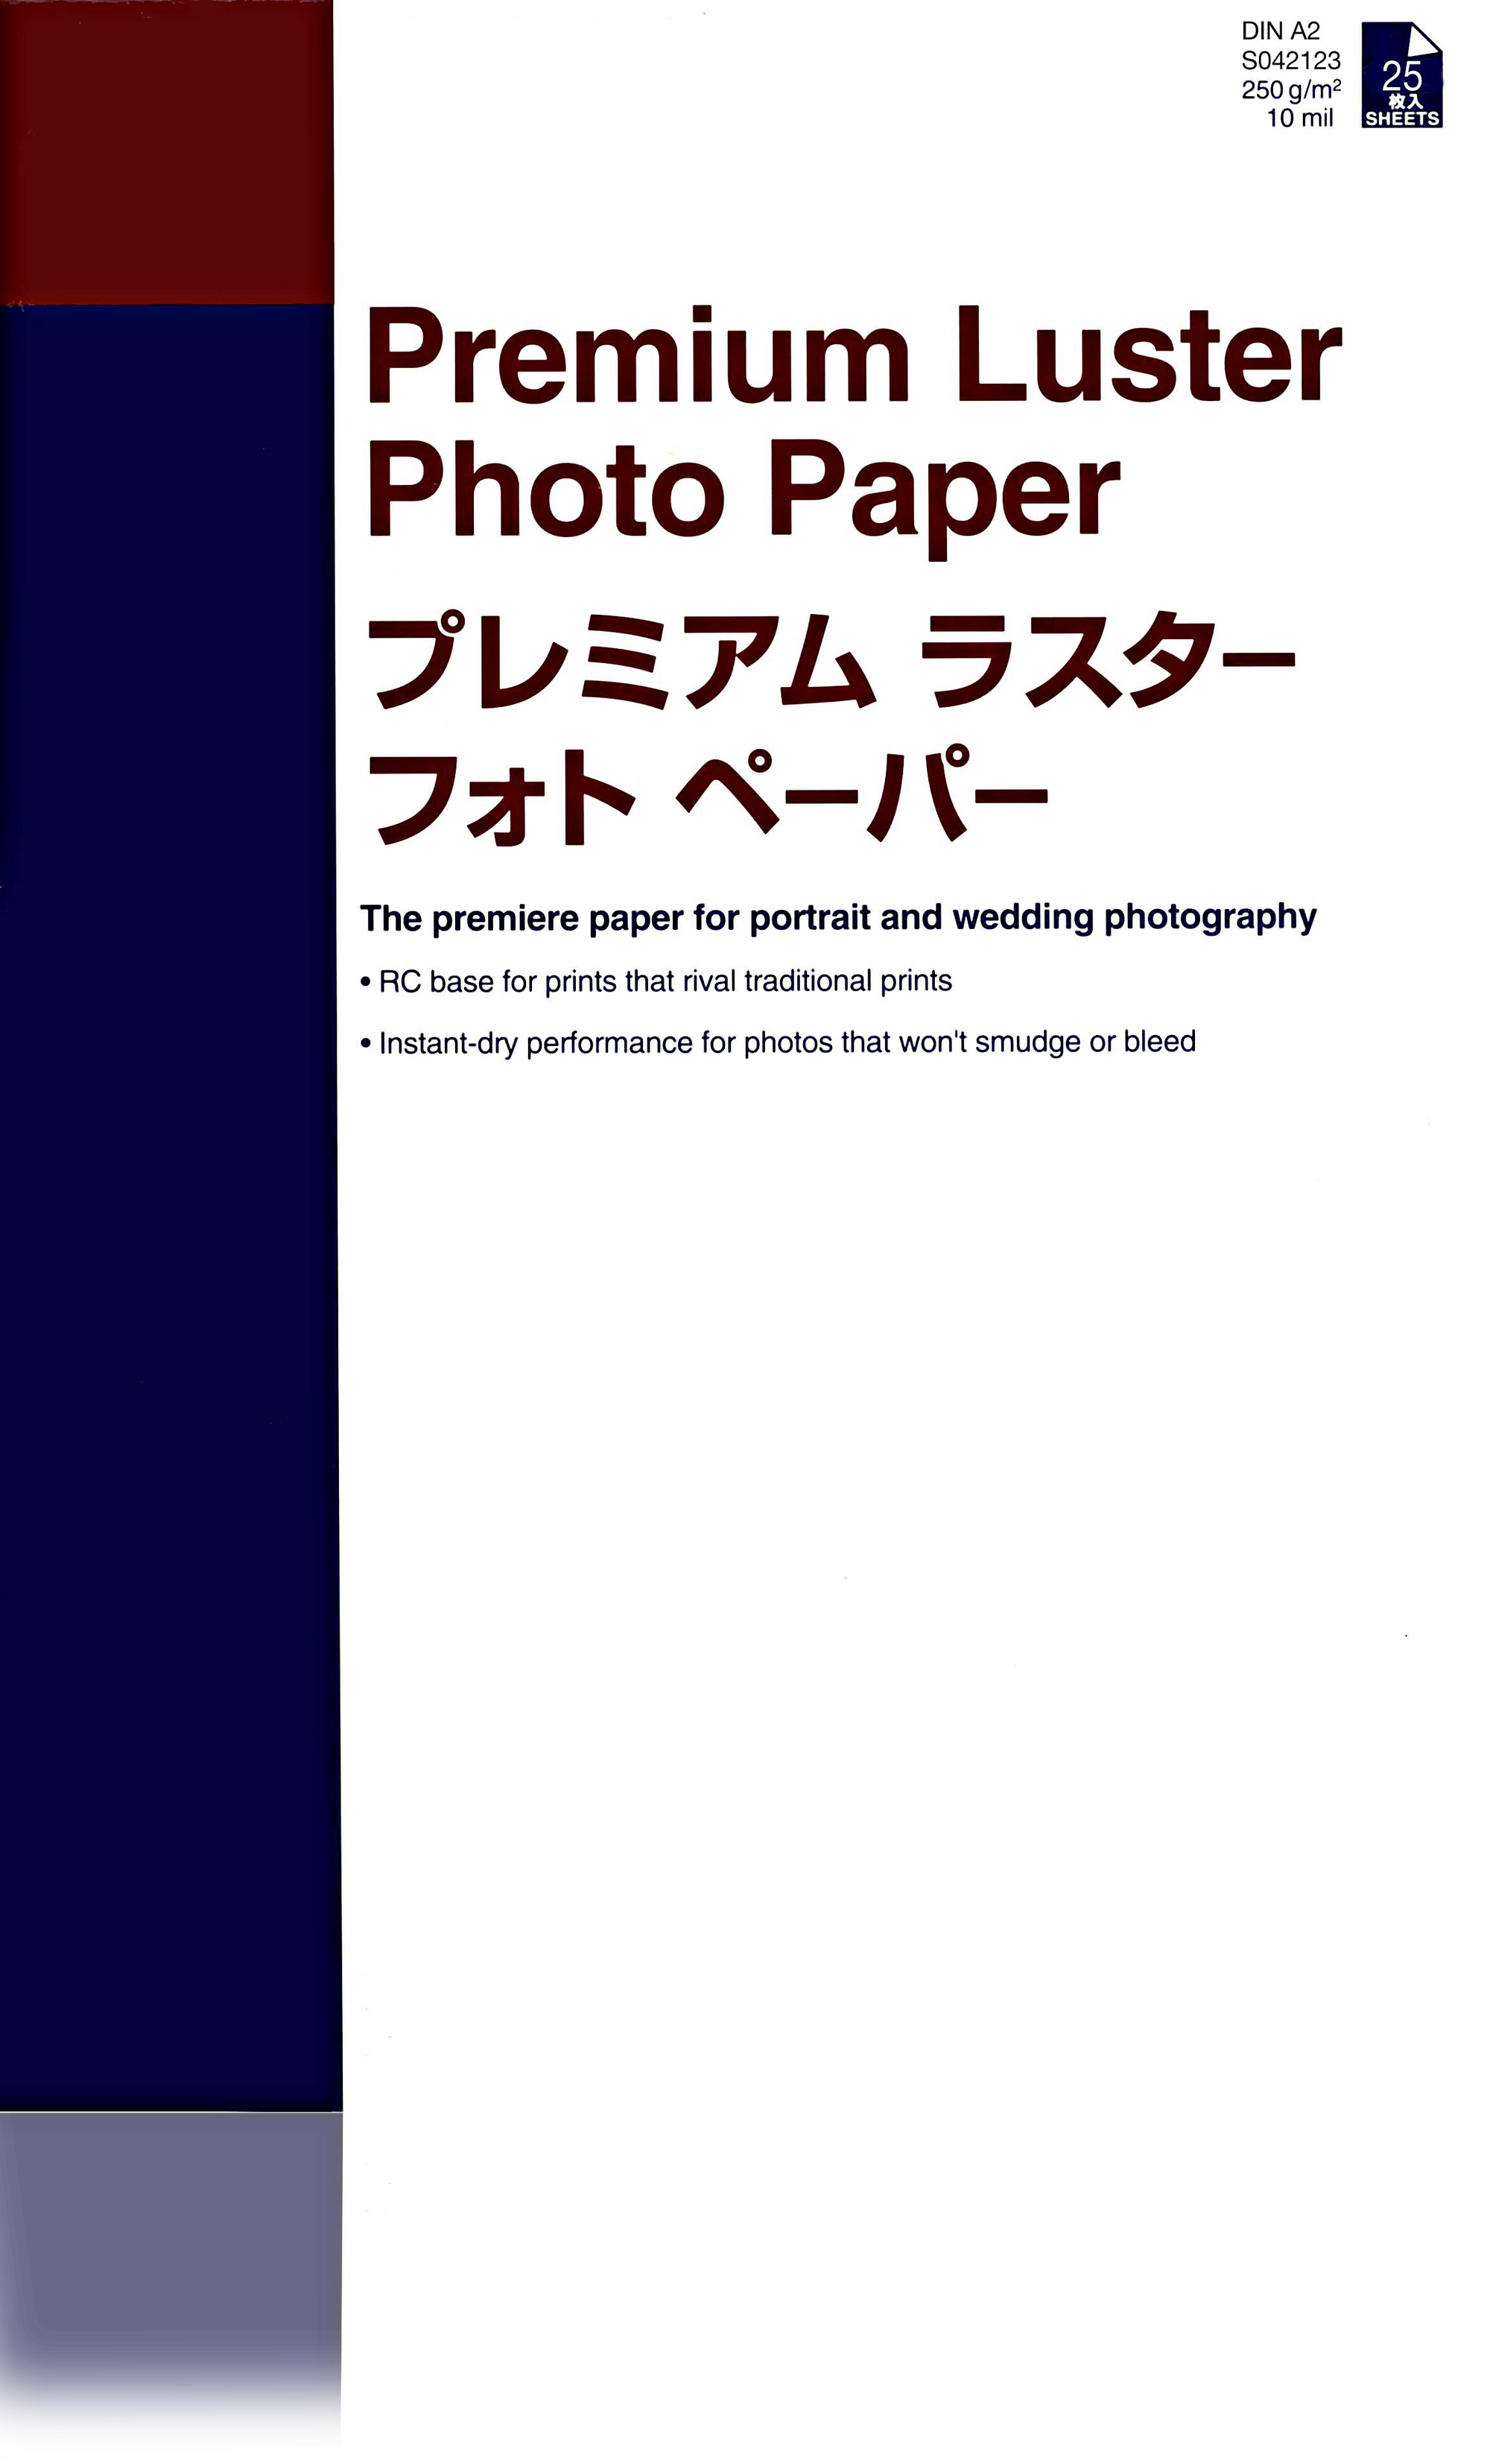 Epson Premium Luster Photo Paper - A2, 250g/m² - 25 sheets